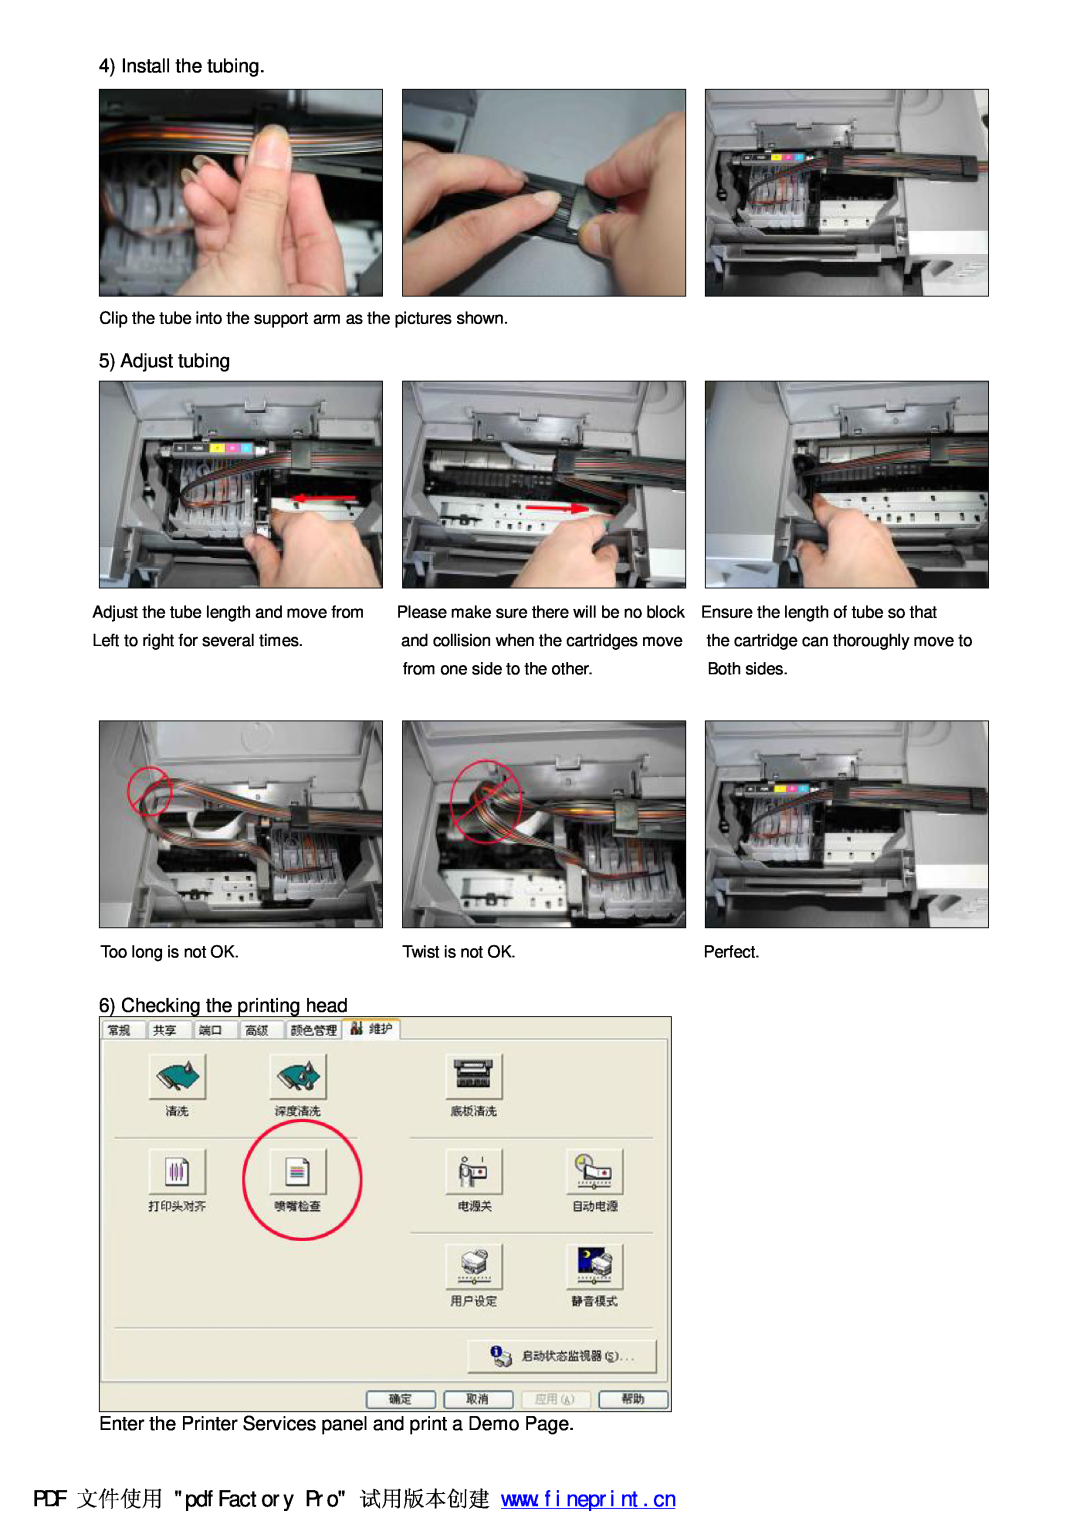 Canon IP4200 manual Install the tubing, Adjust tubing, Checking the printing head 